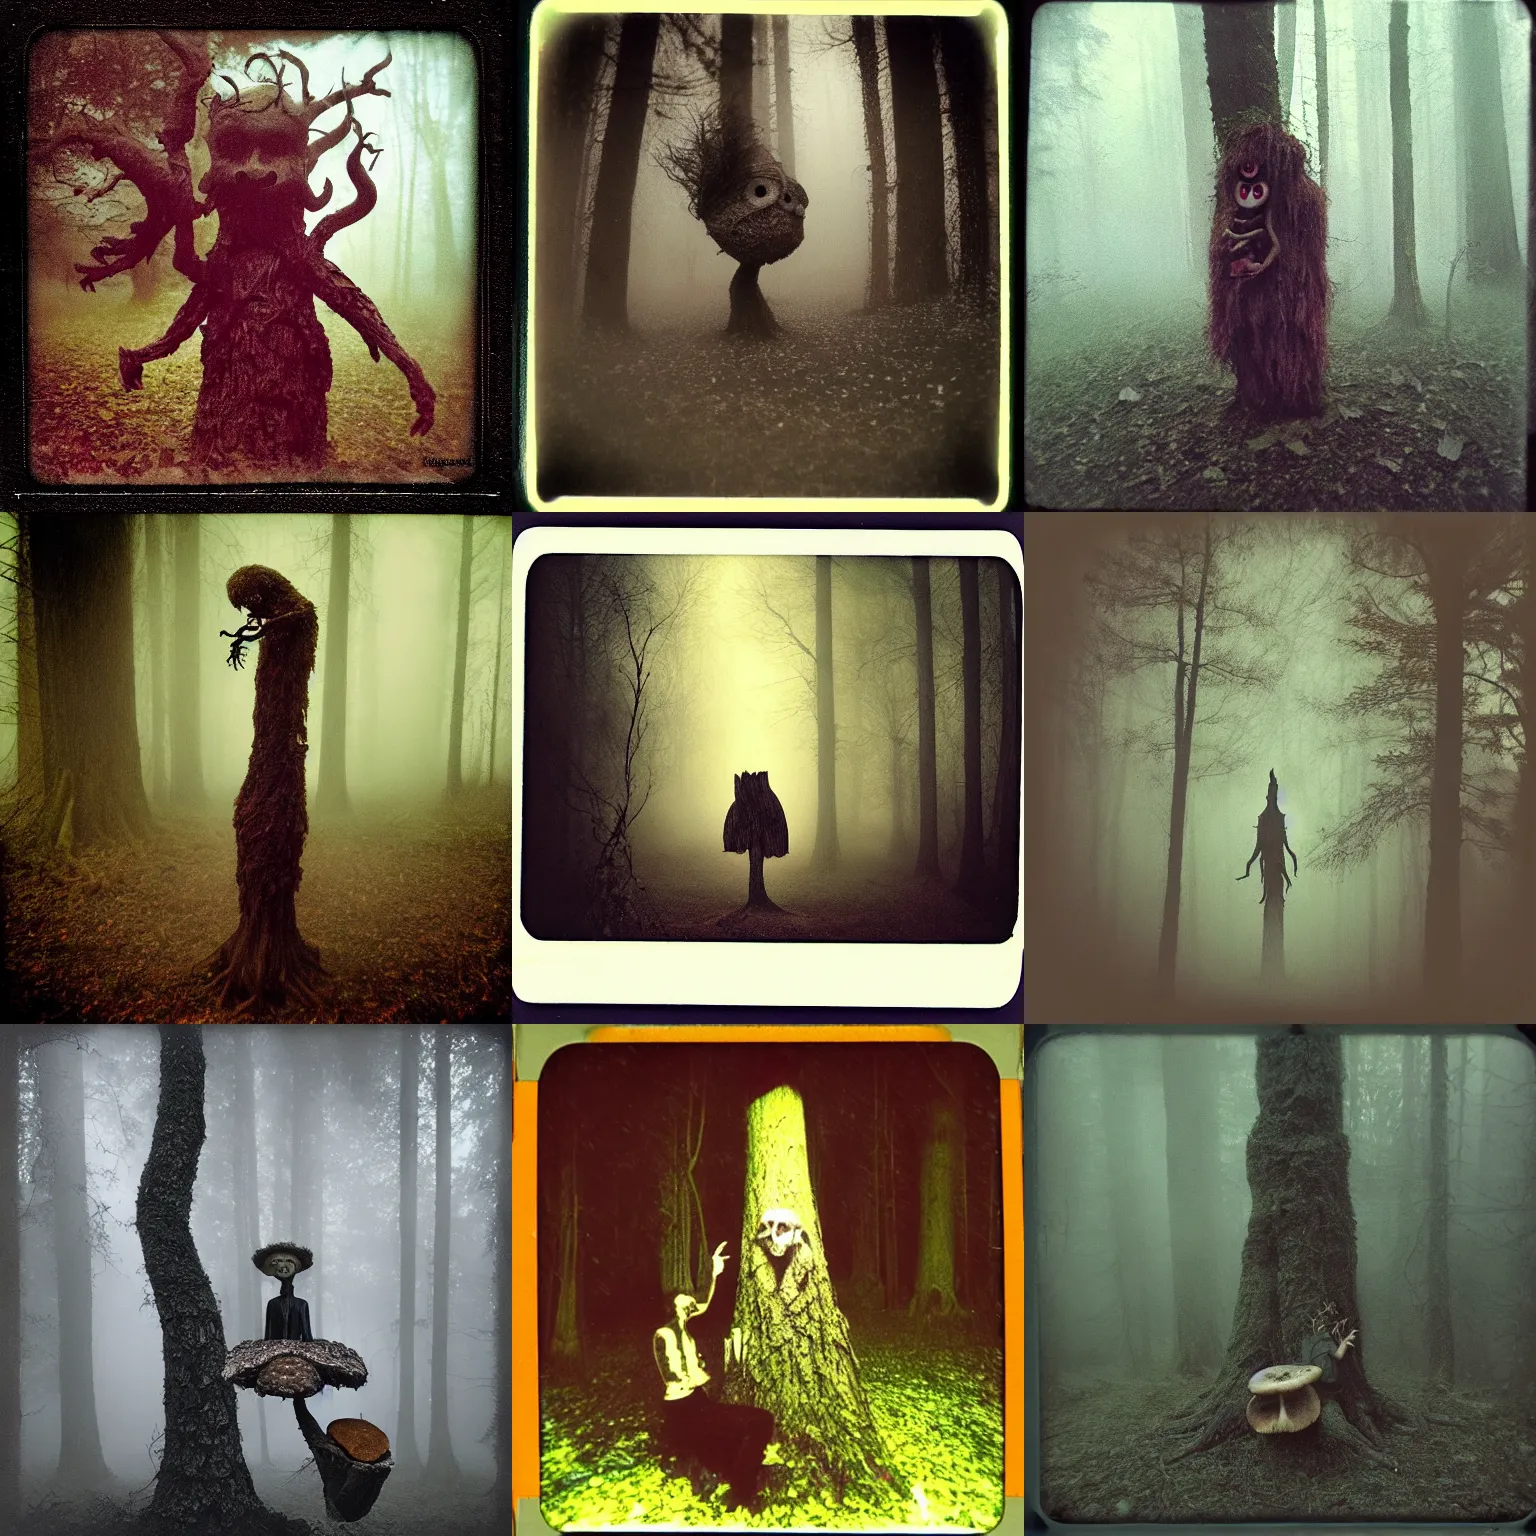 Prompt: anthropomorphic tree creature eating mushrooms, dark fantasy horror, ominous, disturbing, nightmarish, foggy, eerie mist, low quality instant camera photo, by guillermo del toro